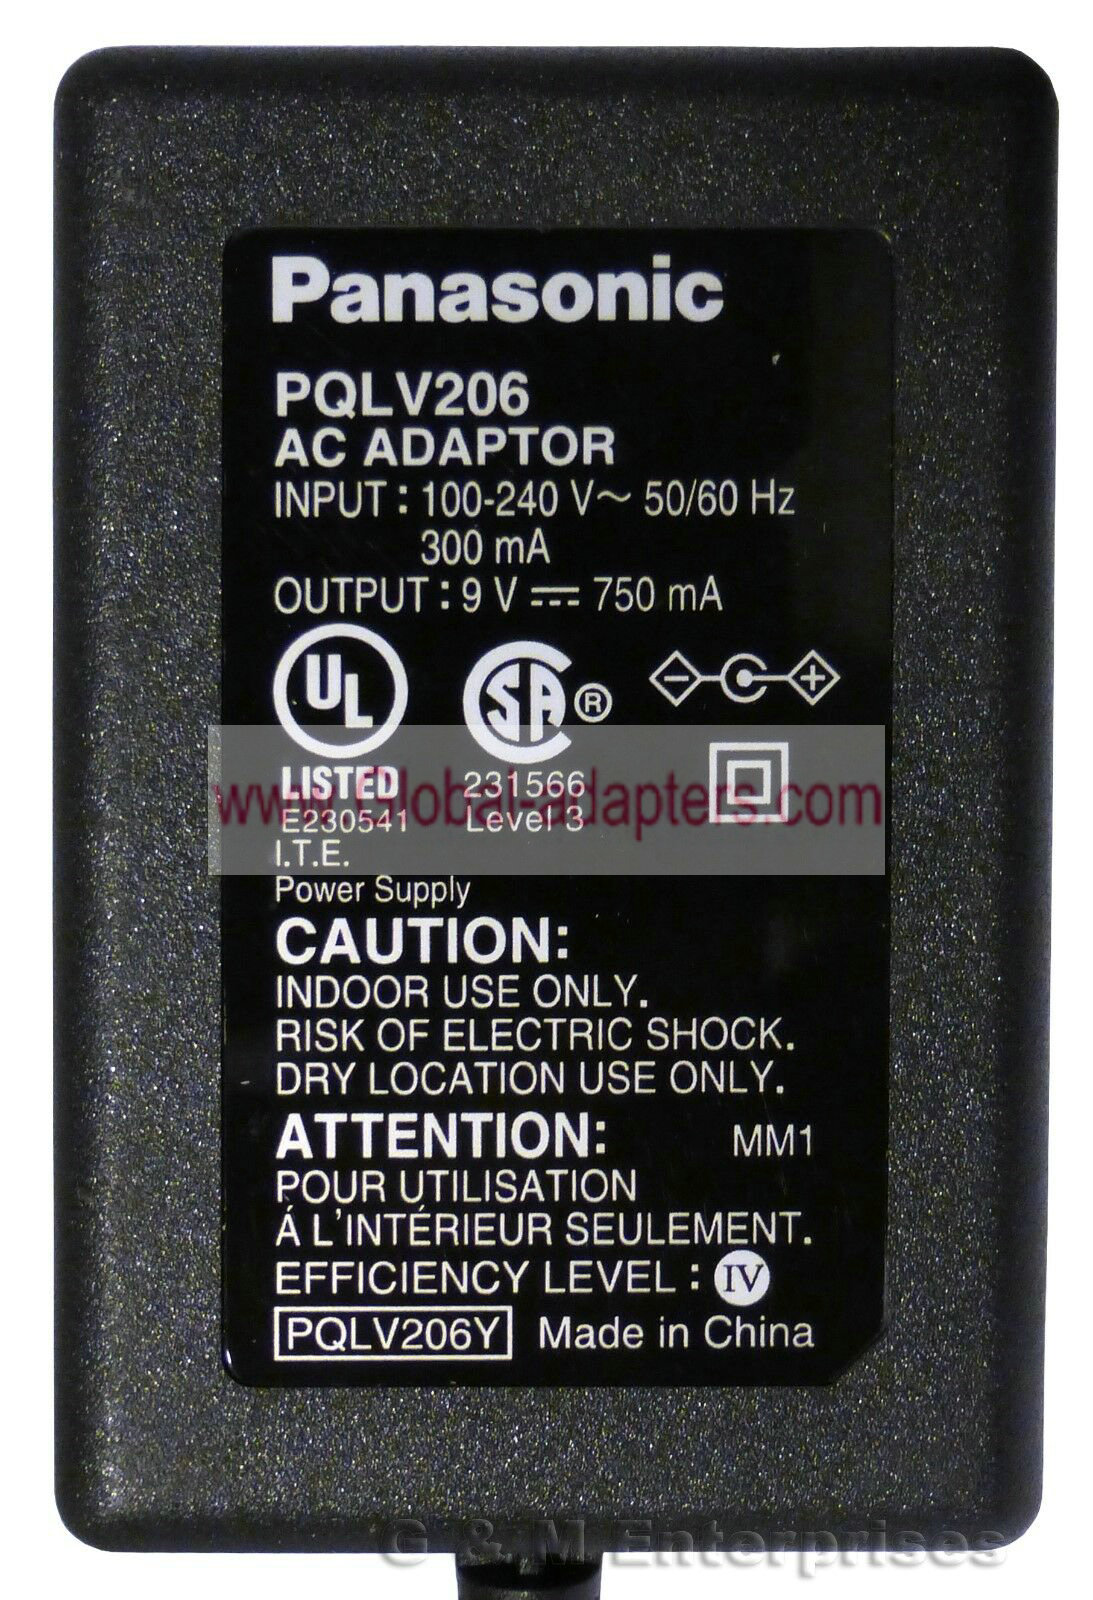 New Panasonic PQLV206Y 9V 750mA AC Adapter for KX-NT700, BL-C230A, C210A, C20A